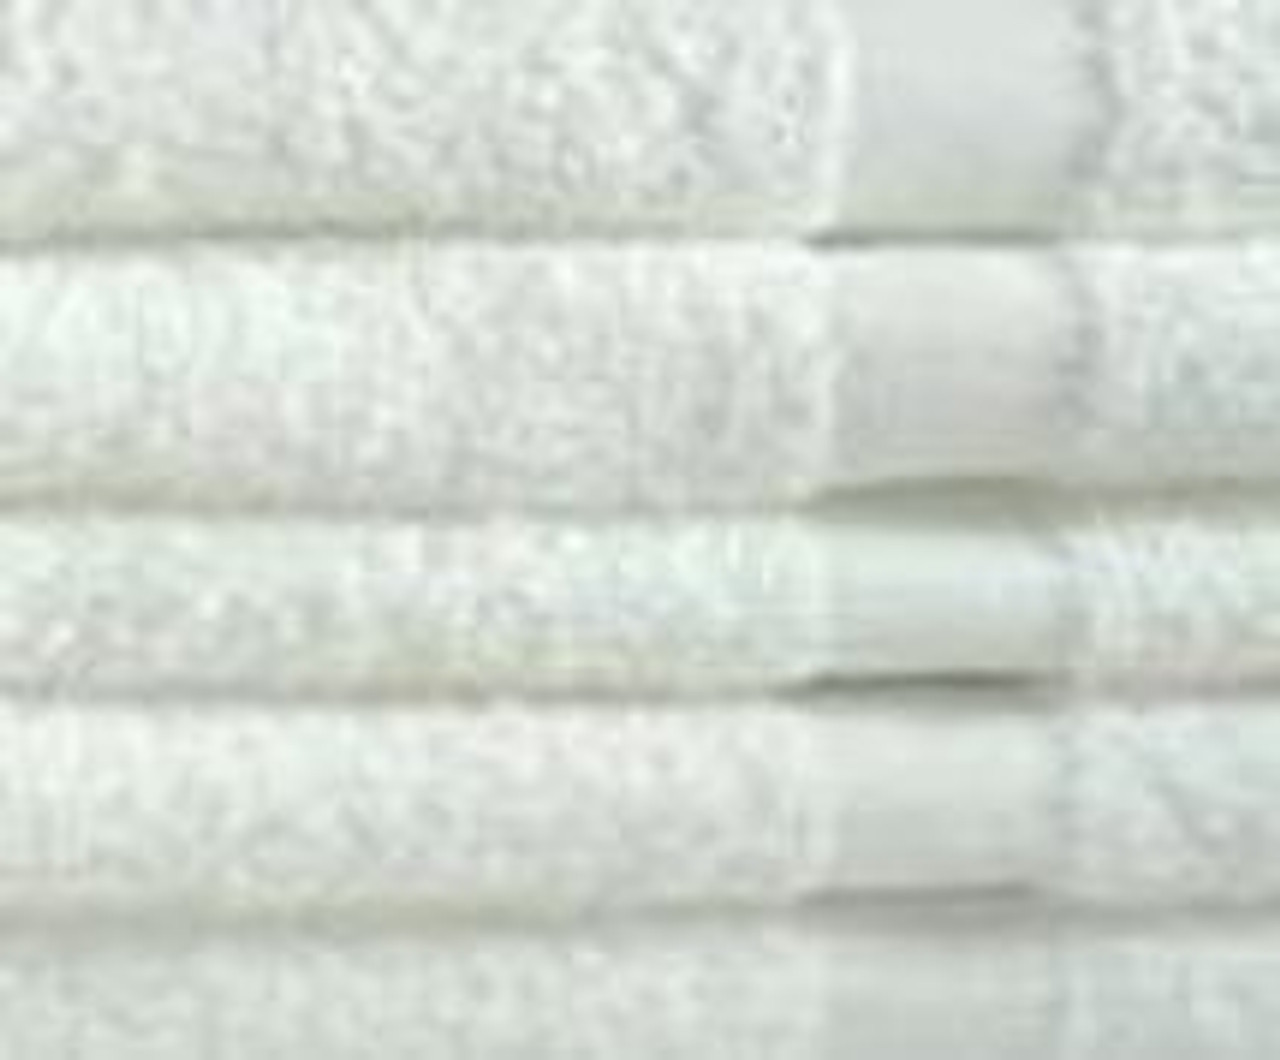 16x27 Premium White Hand Towels 4lbs/dz